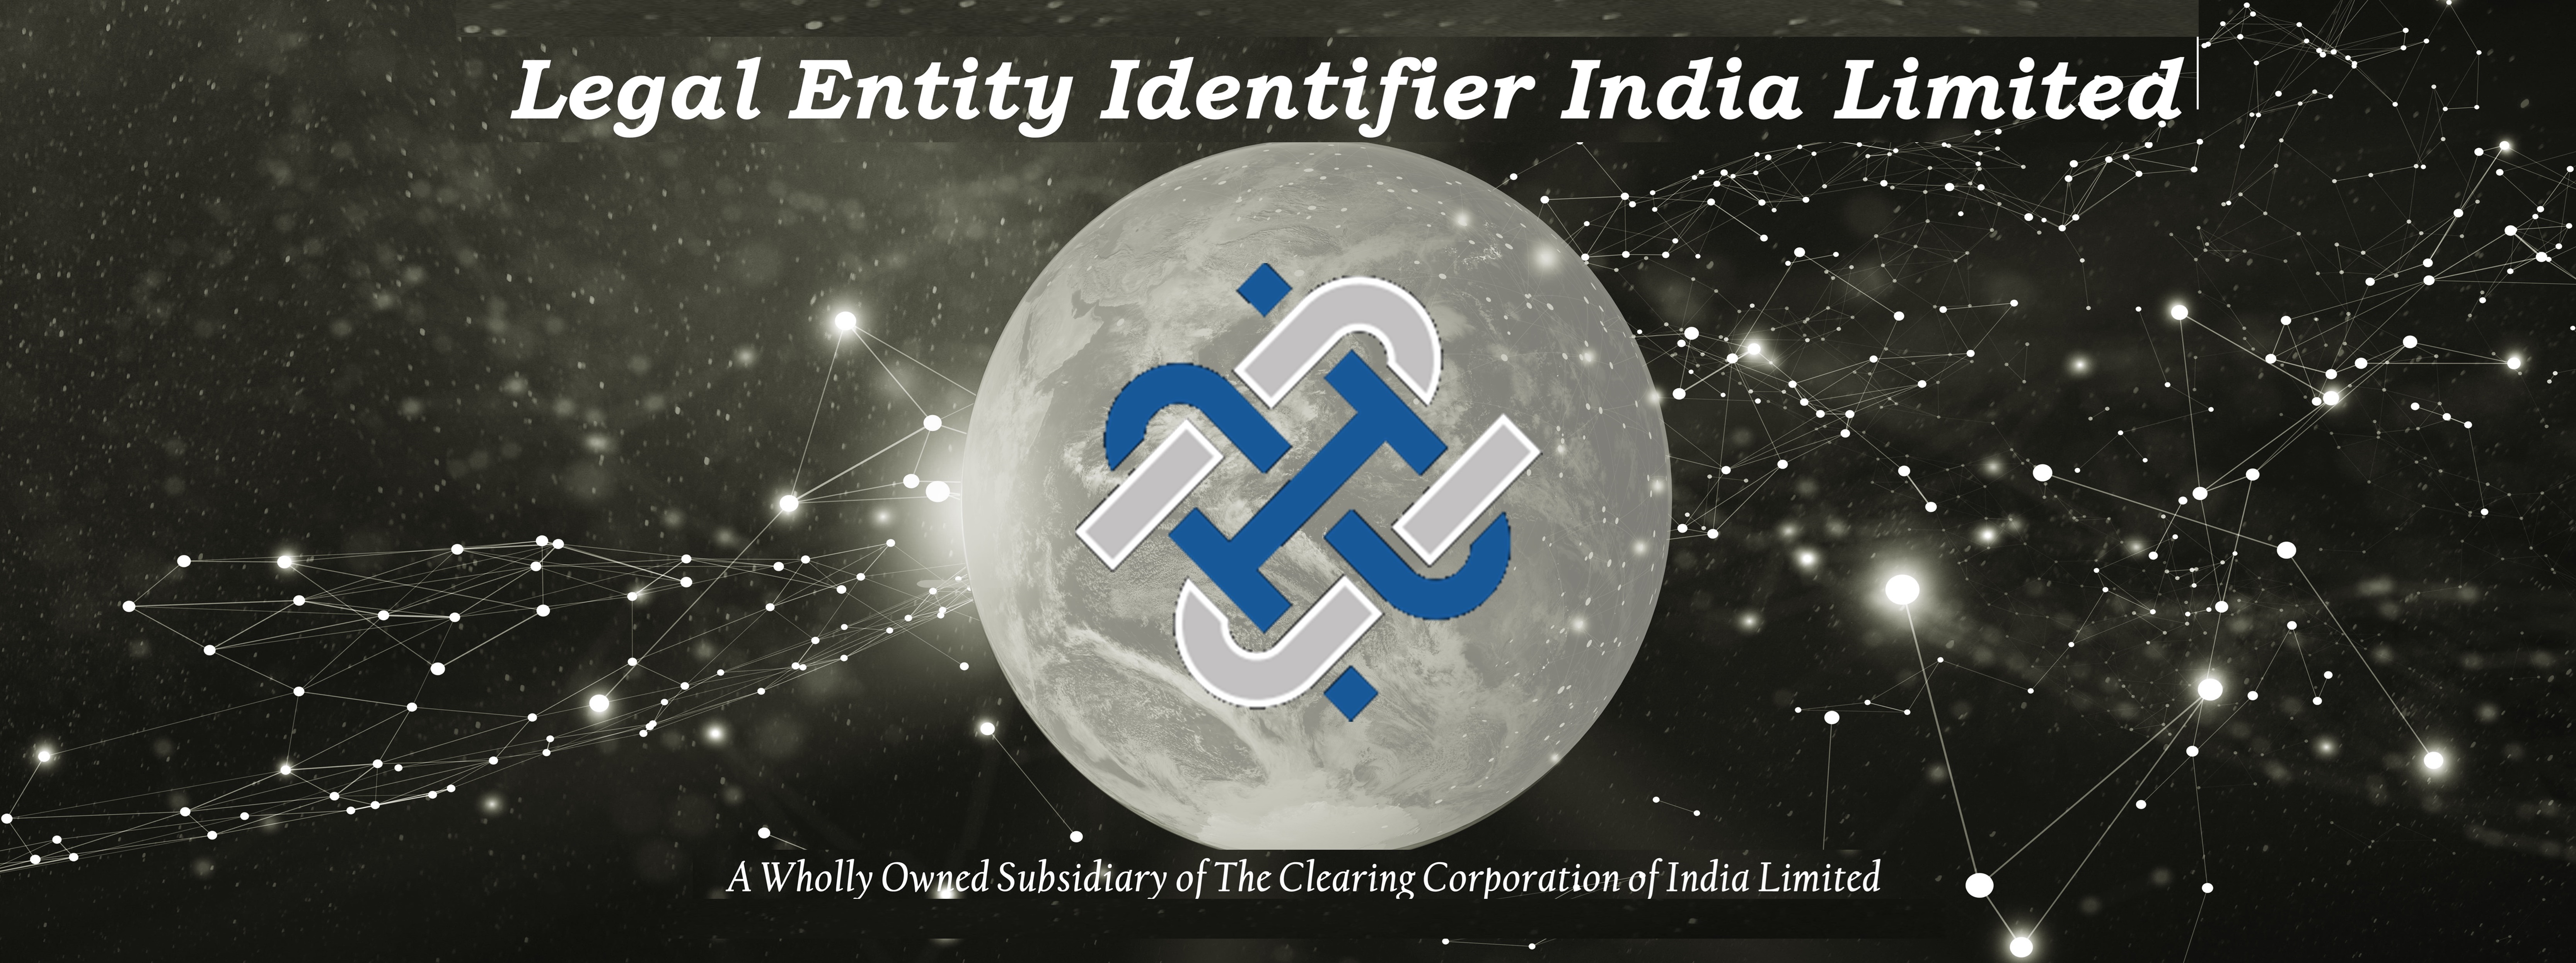 LEIL- Legal Entity Identifier India Limited